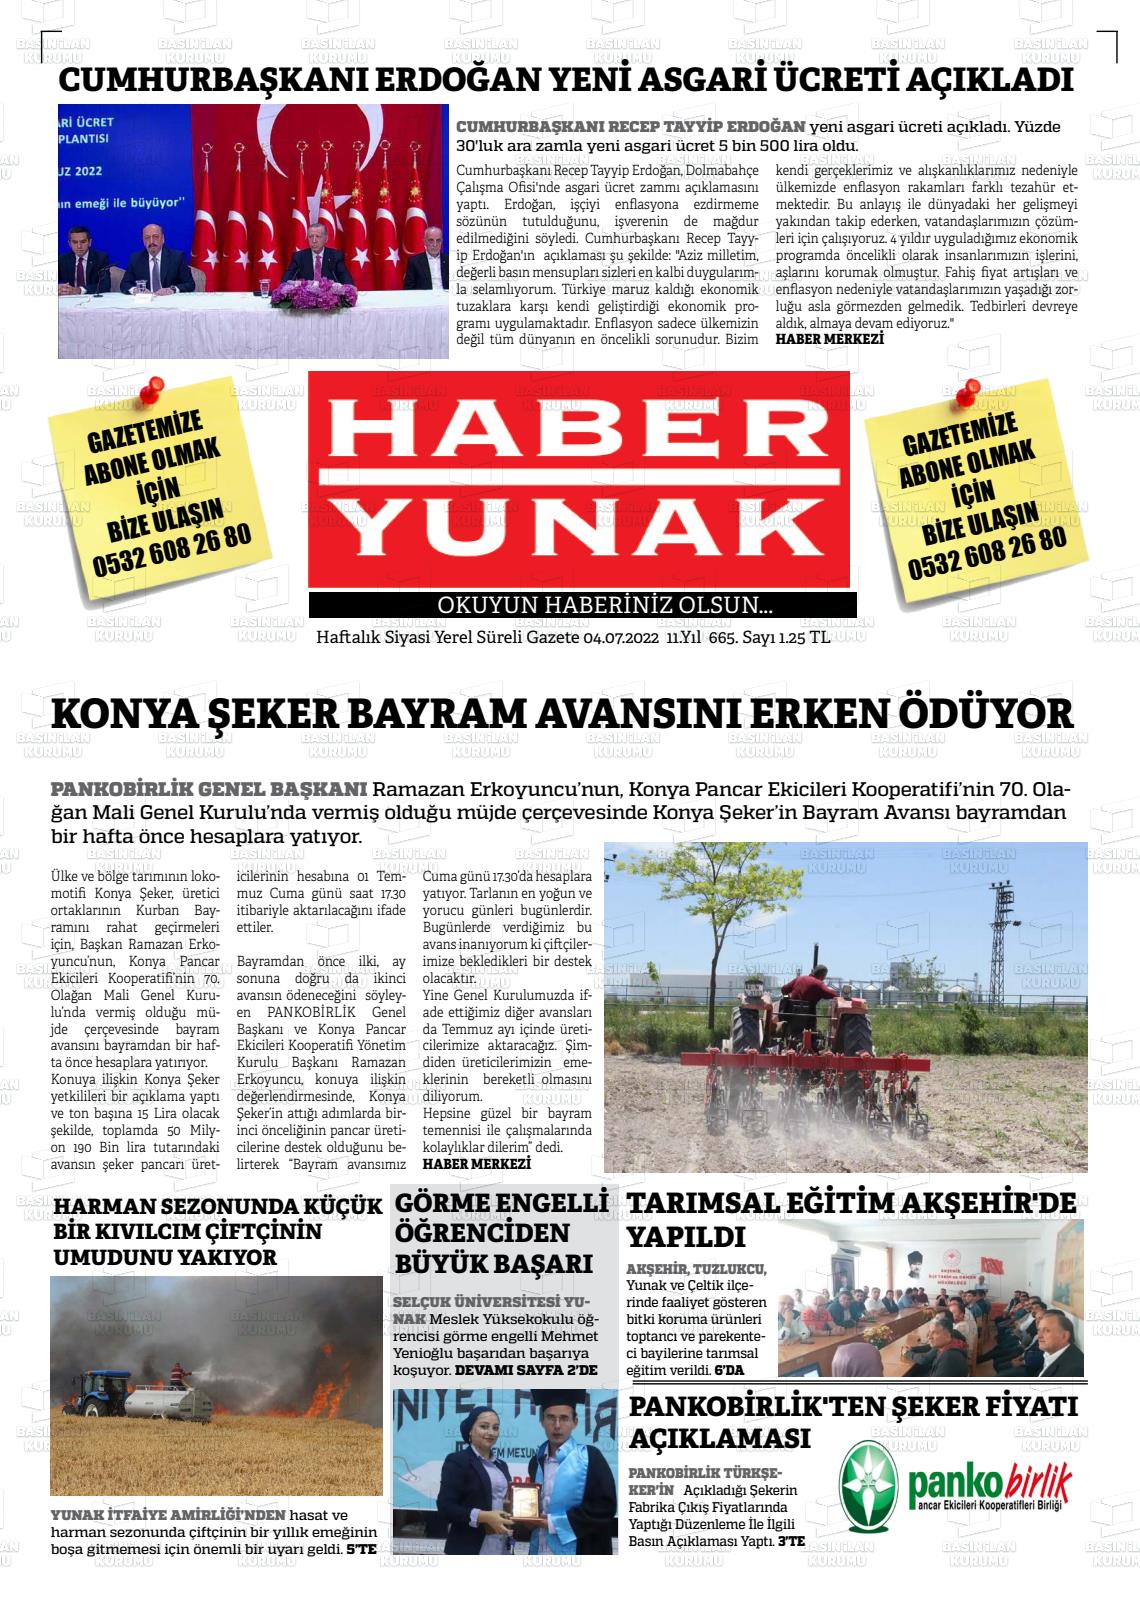 04 Temmuz 2022 Haber Yunak Gazete Manşeti